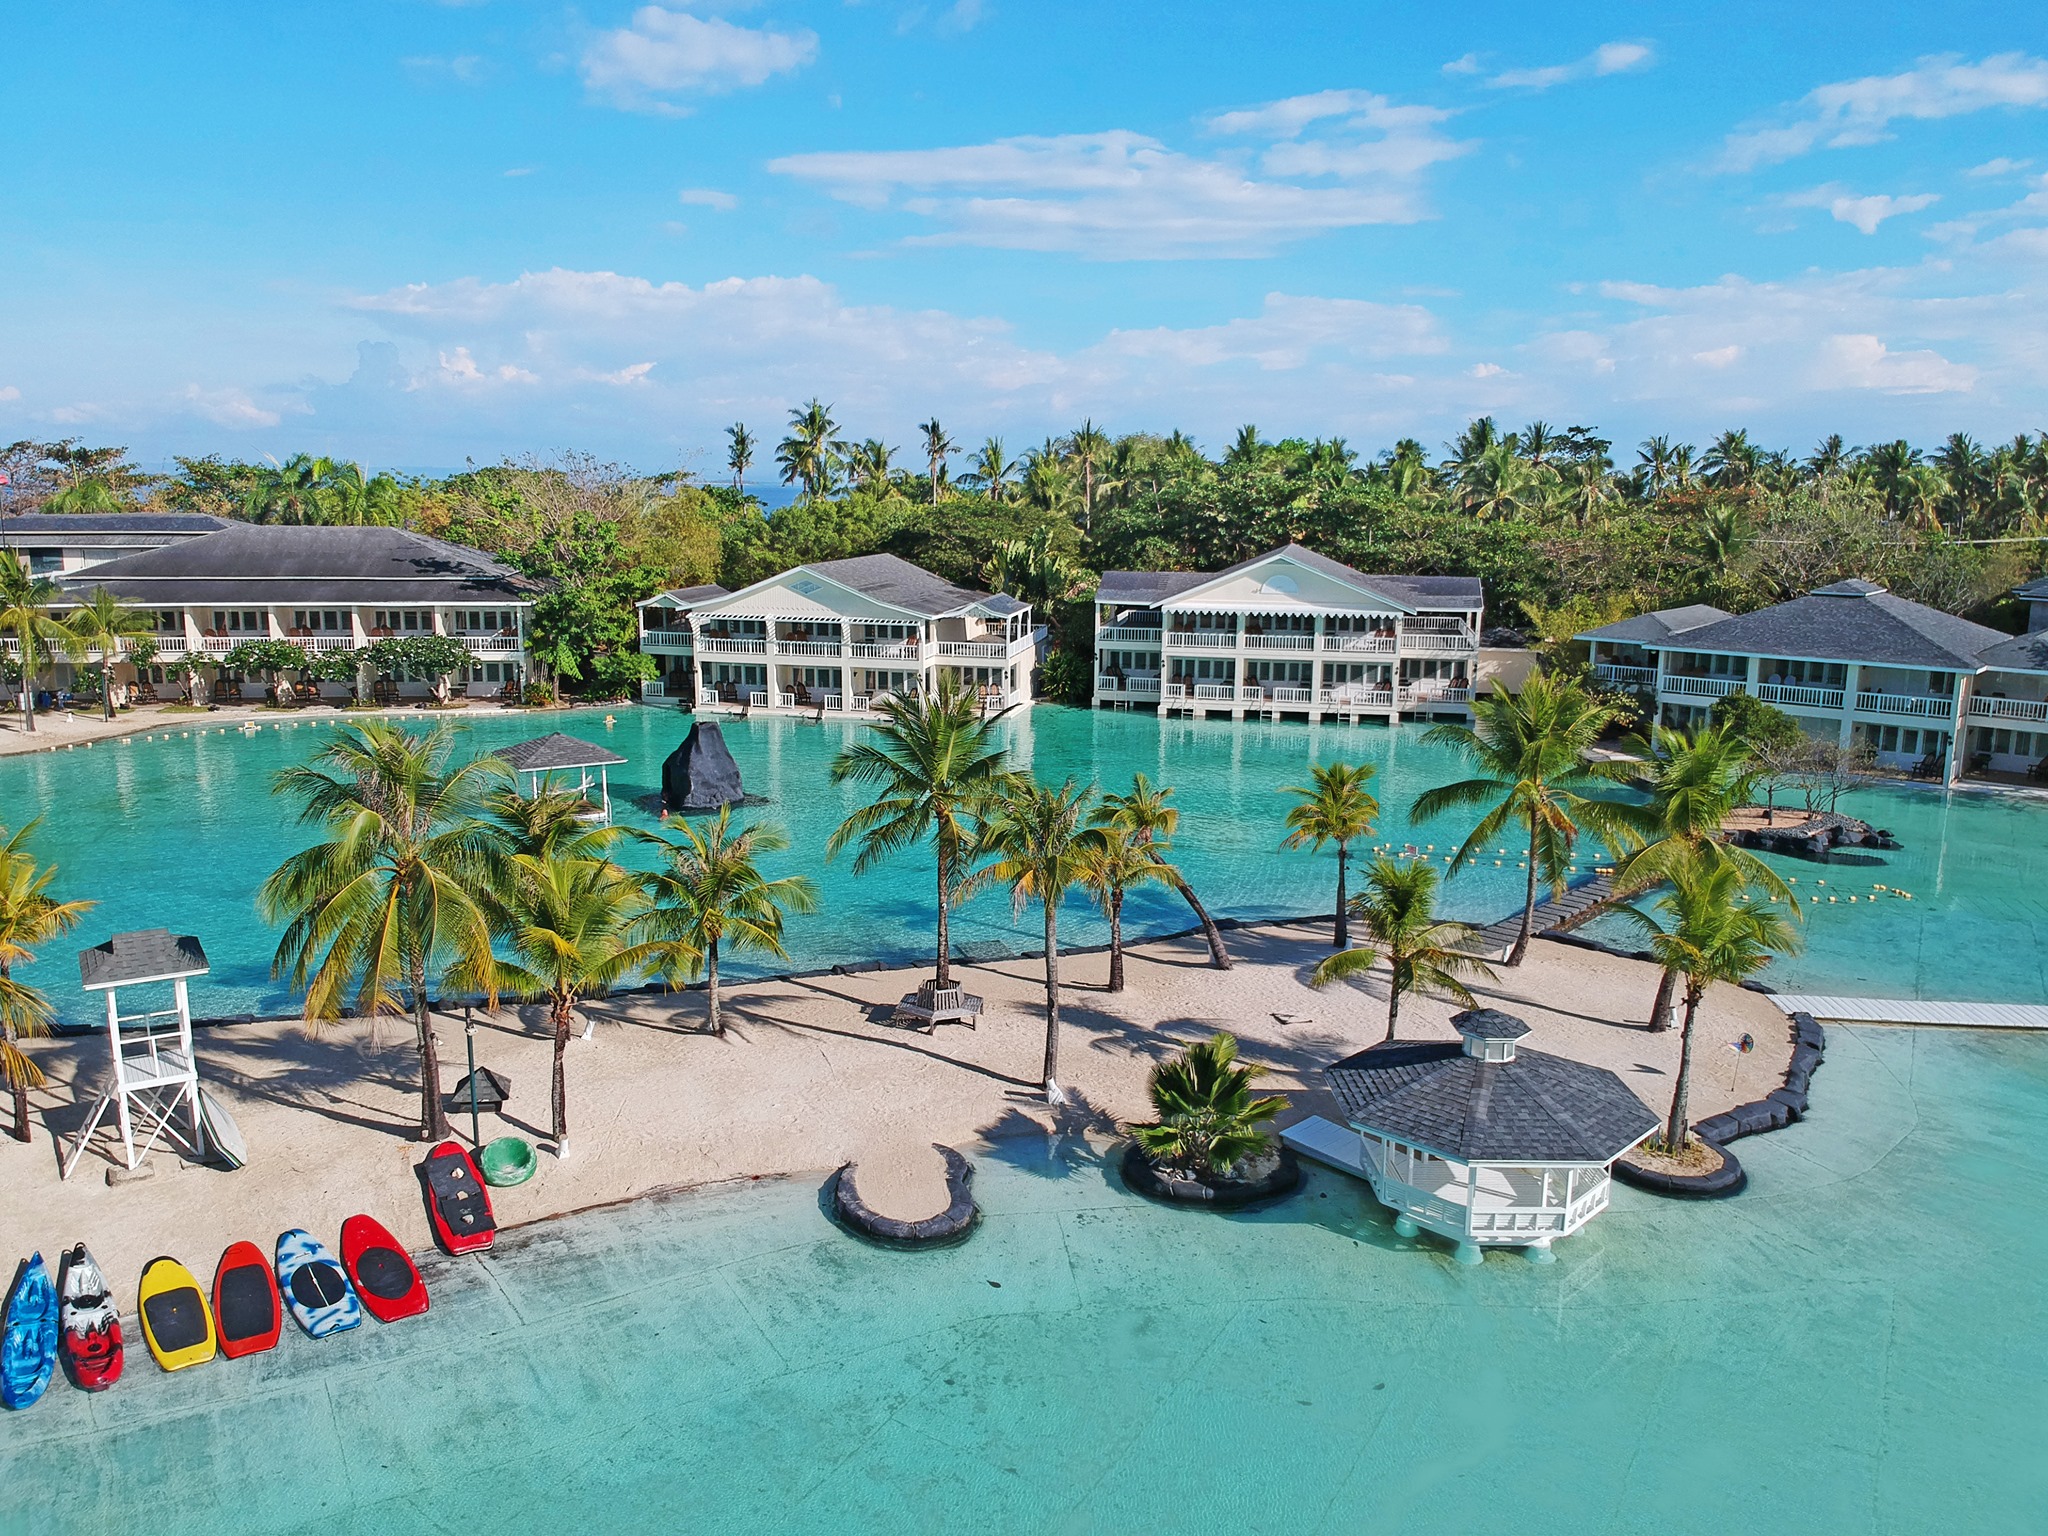 Plantation Bay Bay Resort and Spa’s resident shareholder resigns